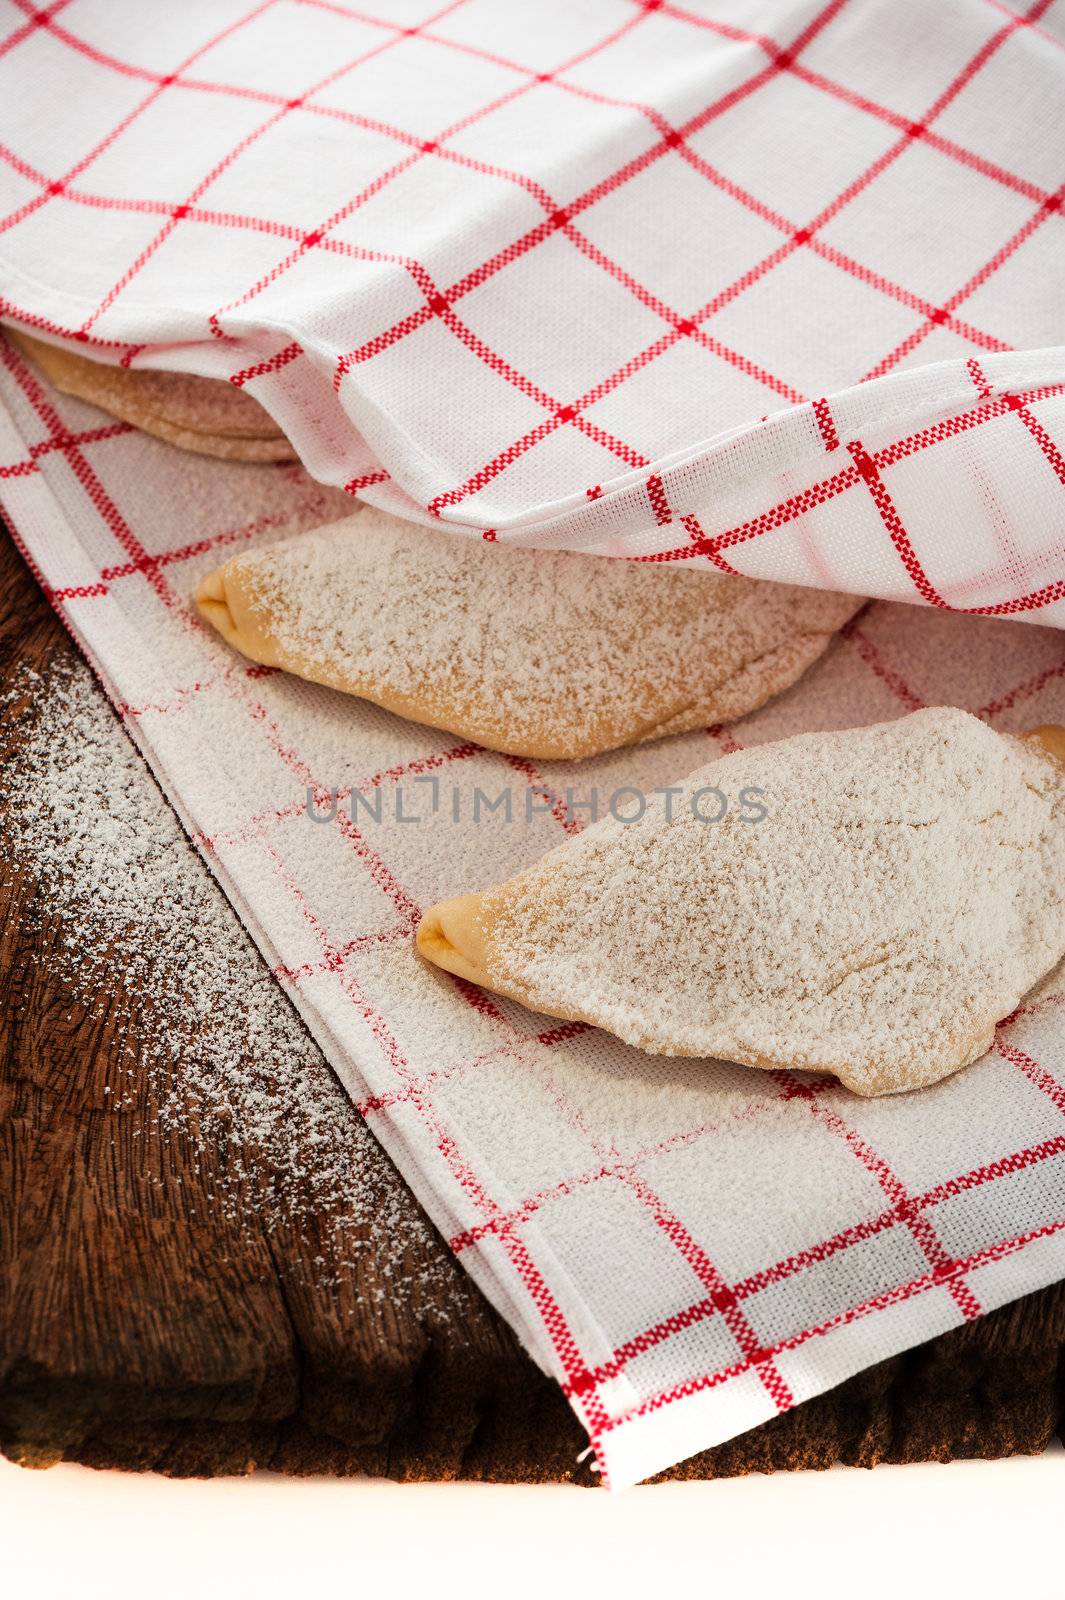 Raw Pierogi (Polish dumplings) on wooden board and kitchen towel